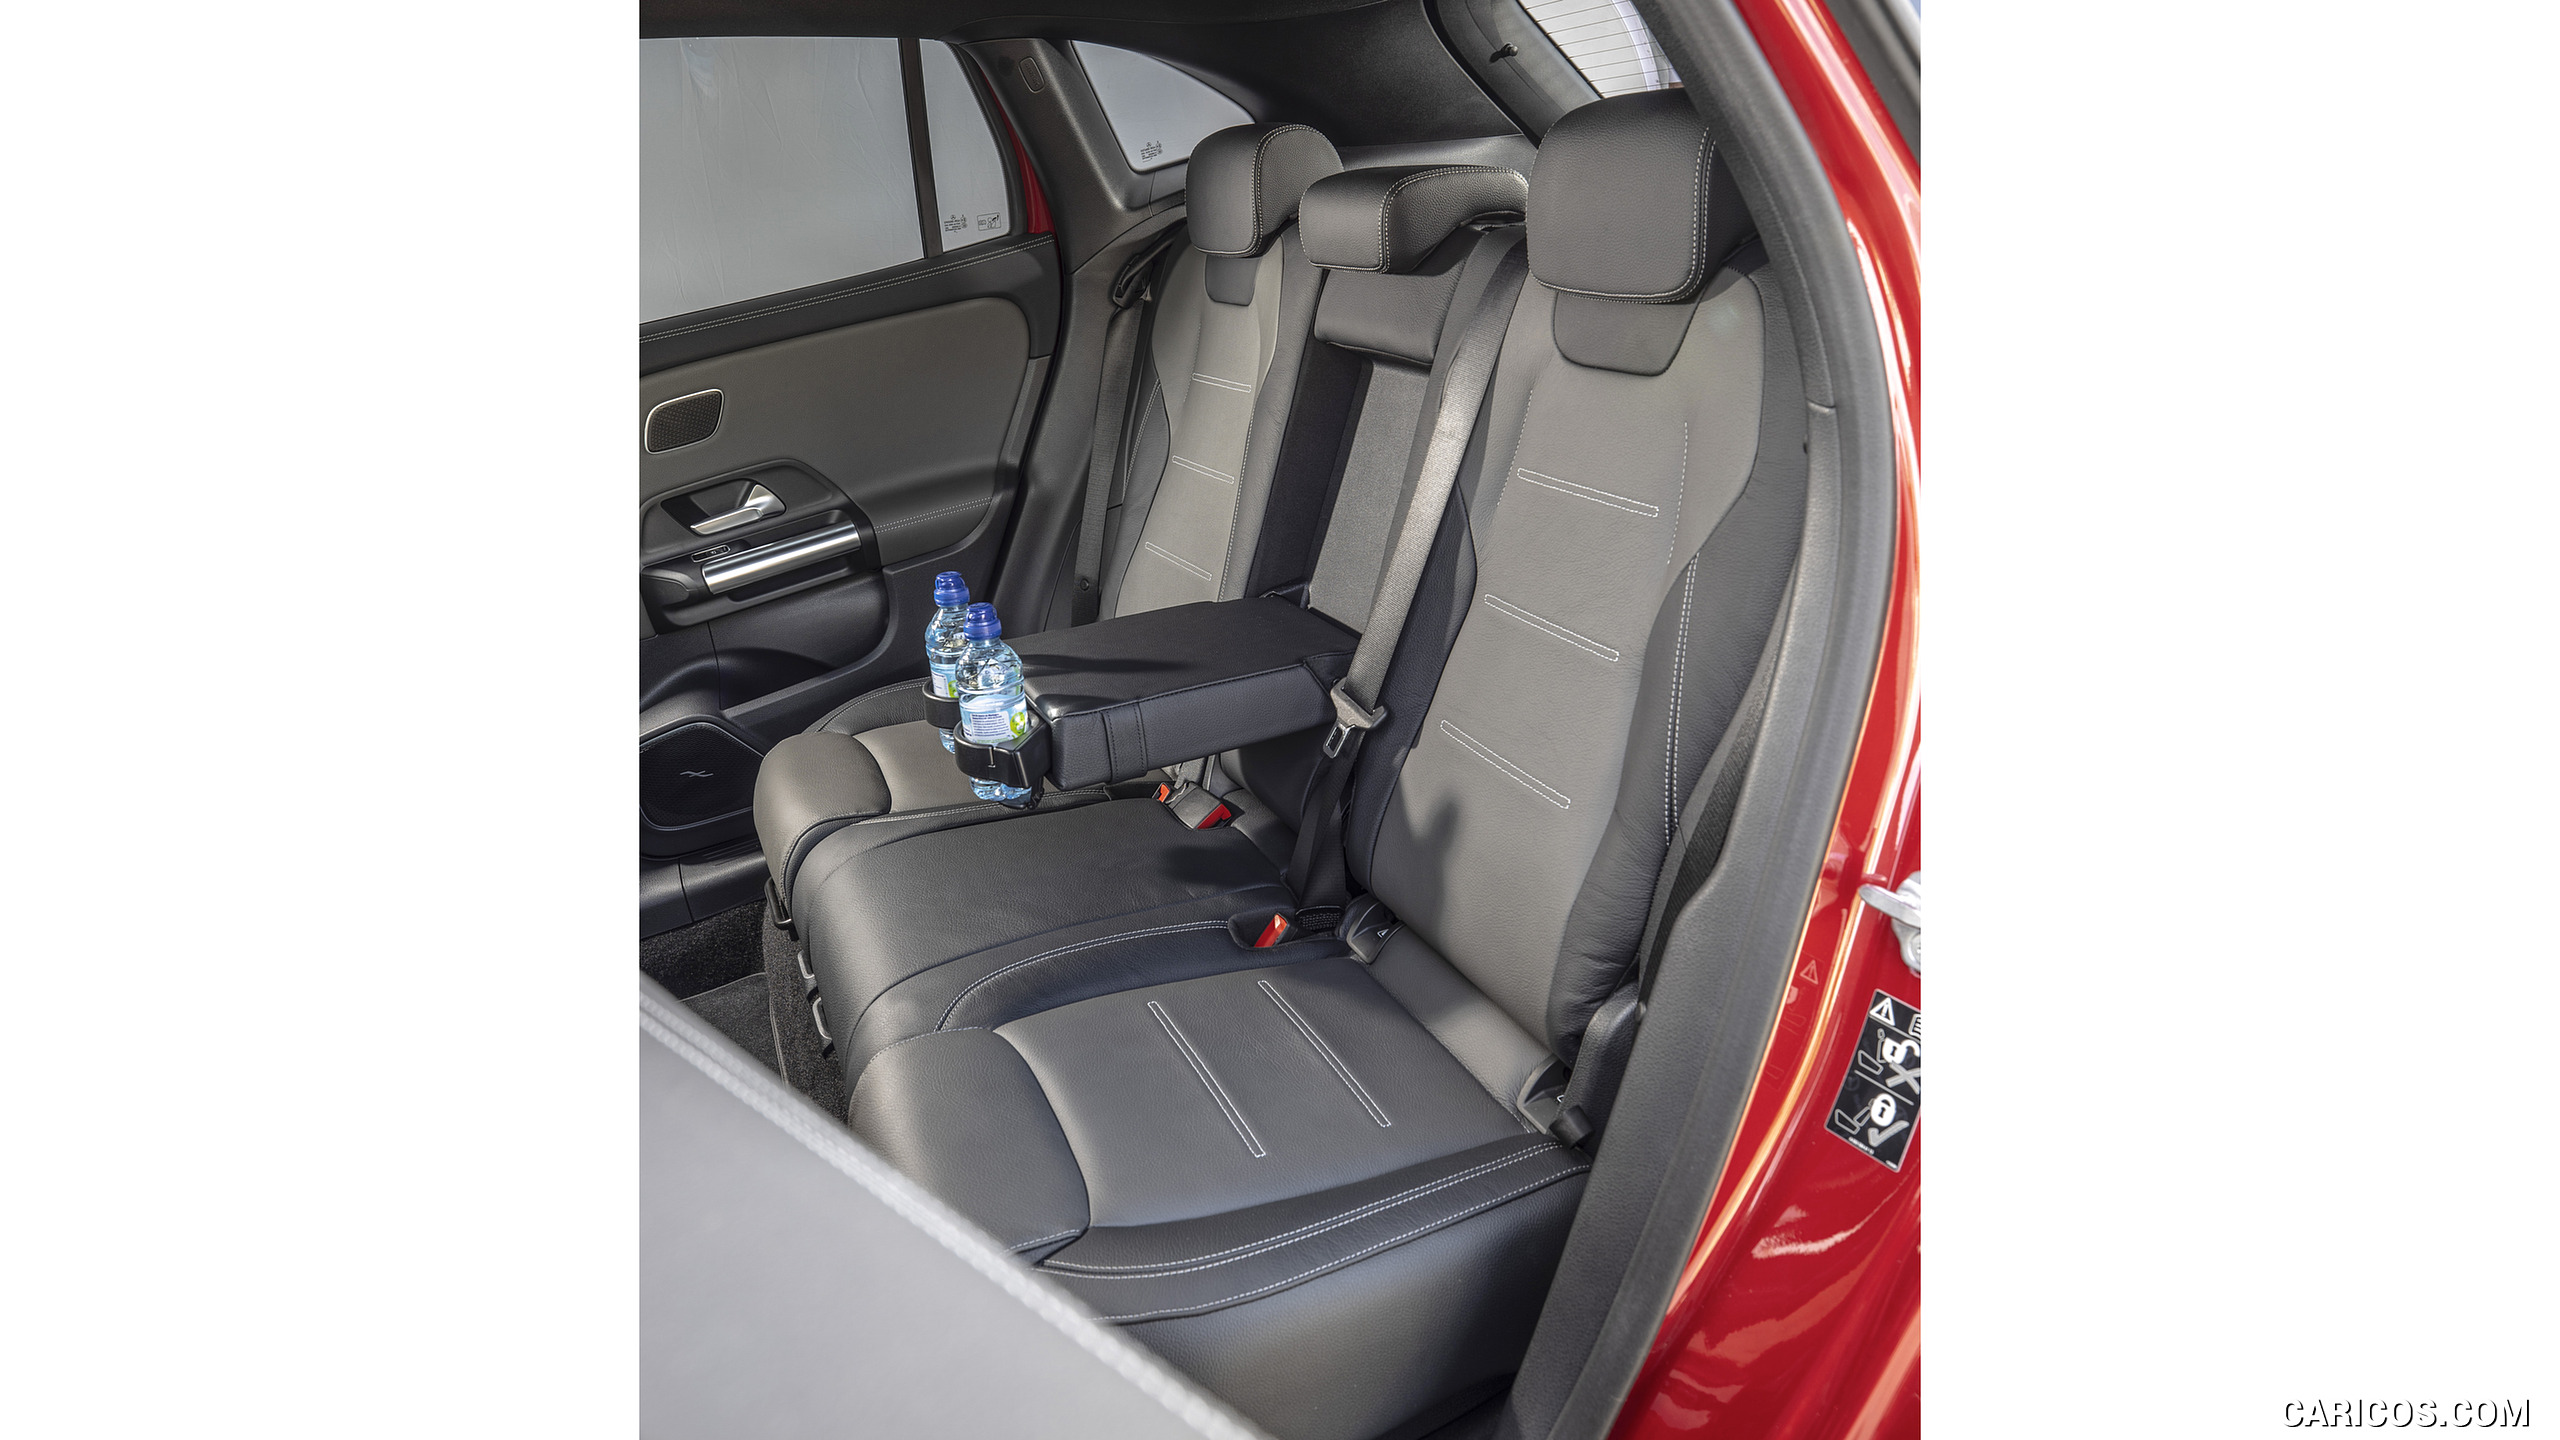 2021 Mercedes-AMG GLA 35 4MATIC - Interior, Rear Seats, #60 of 104